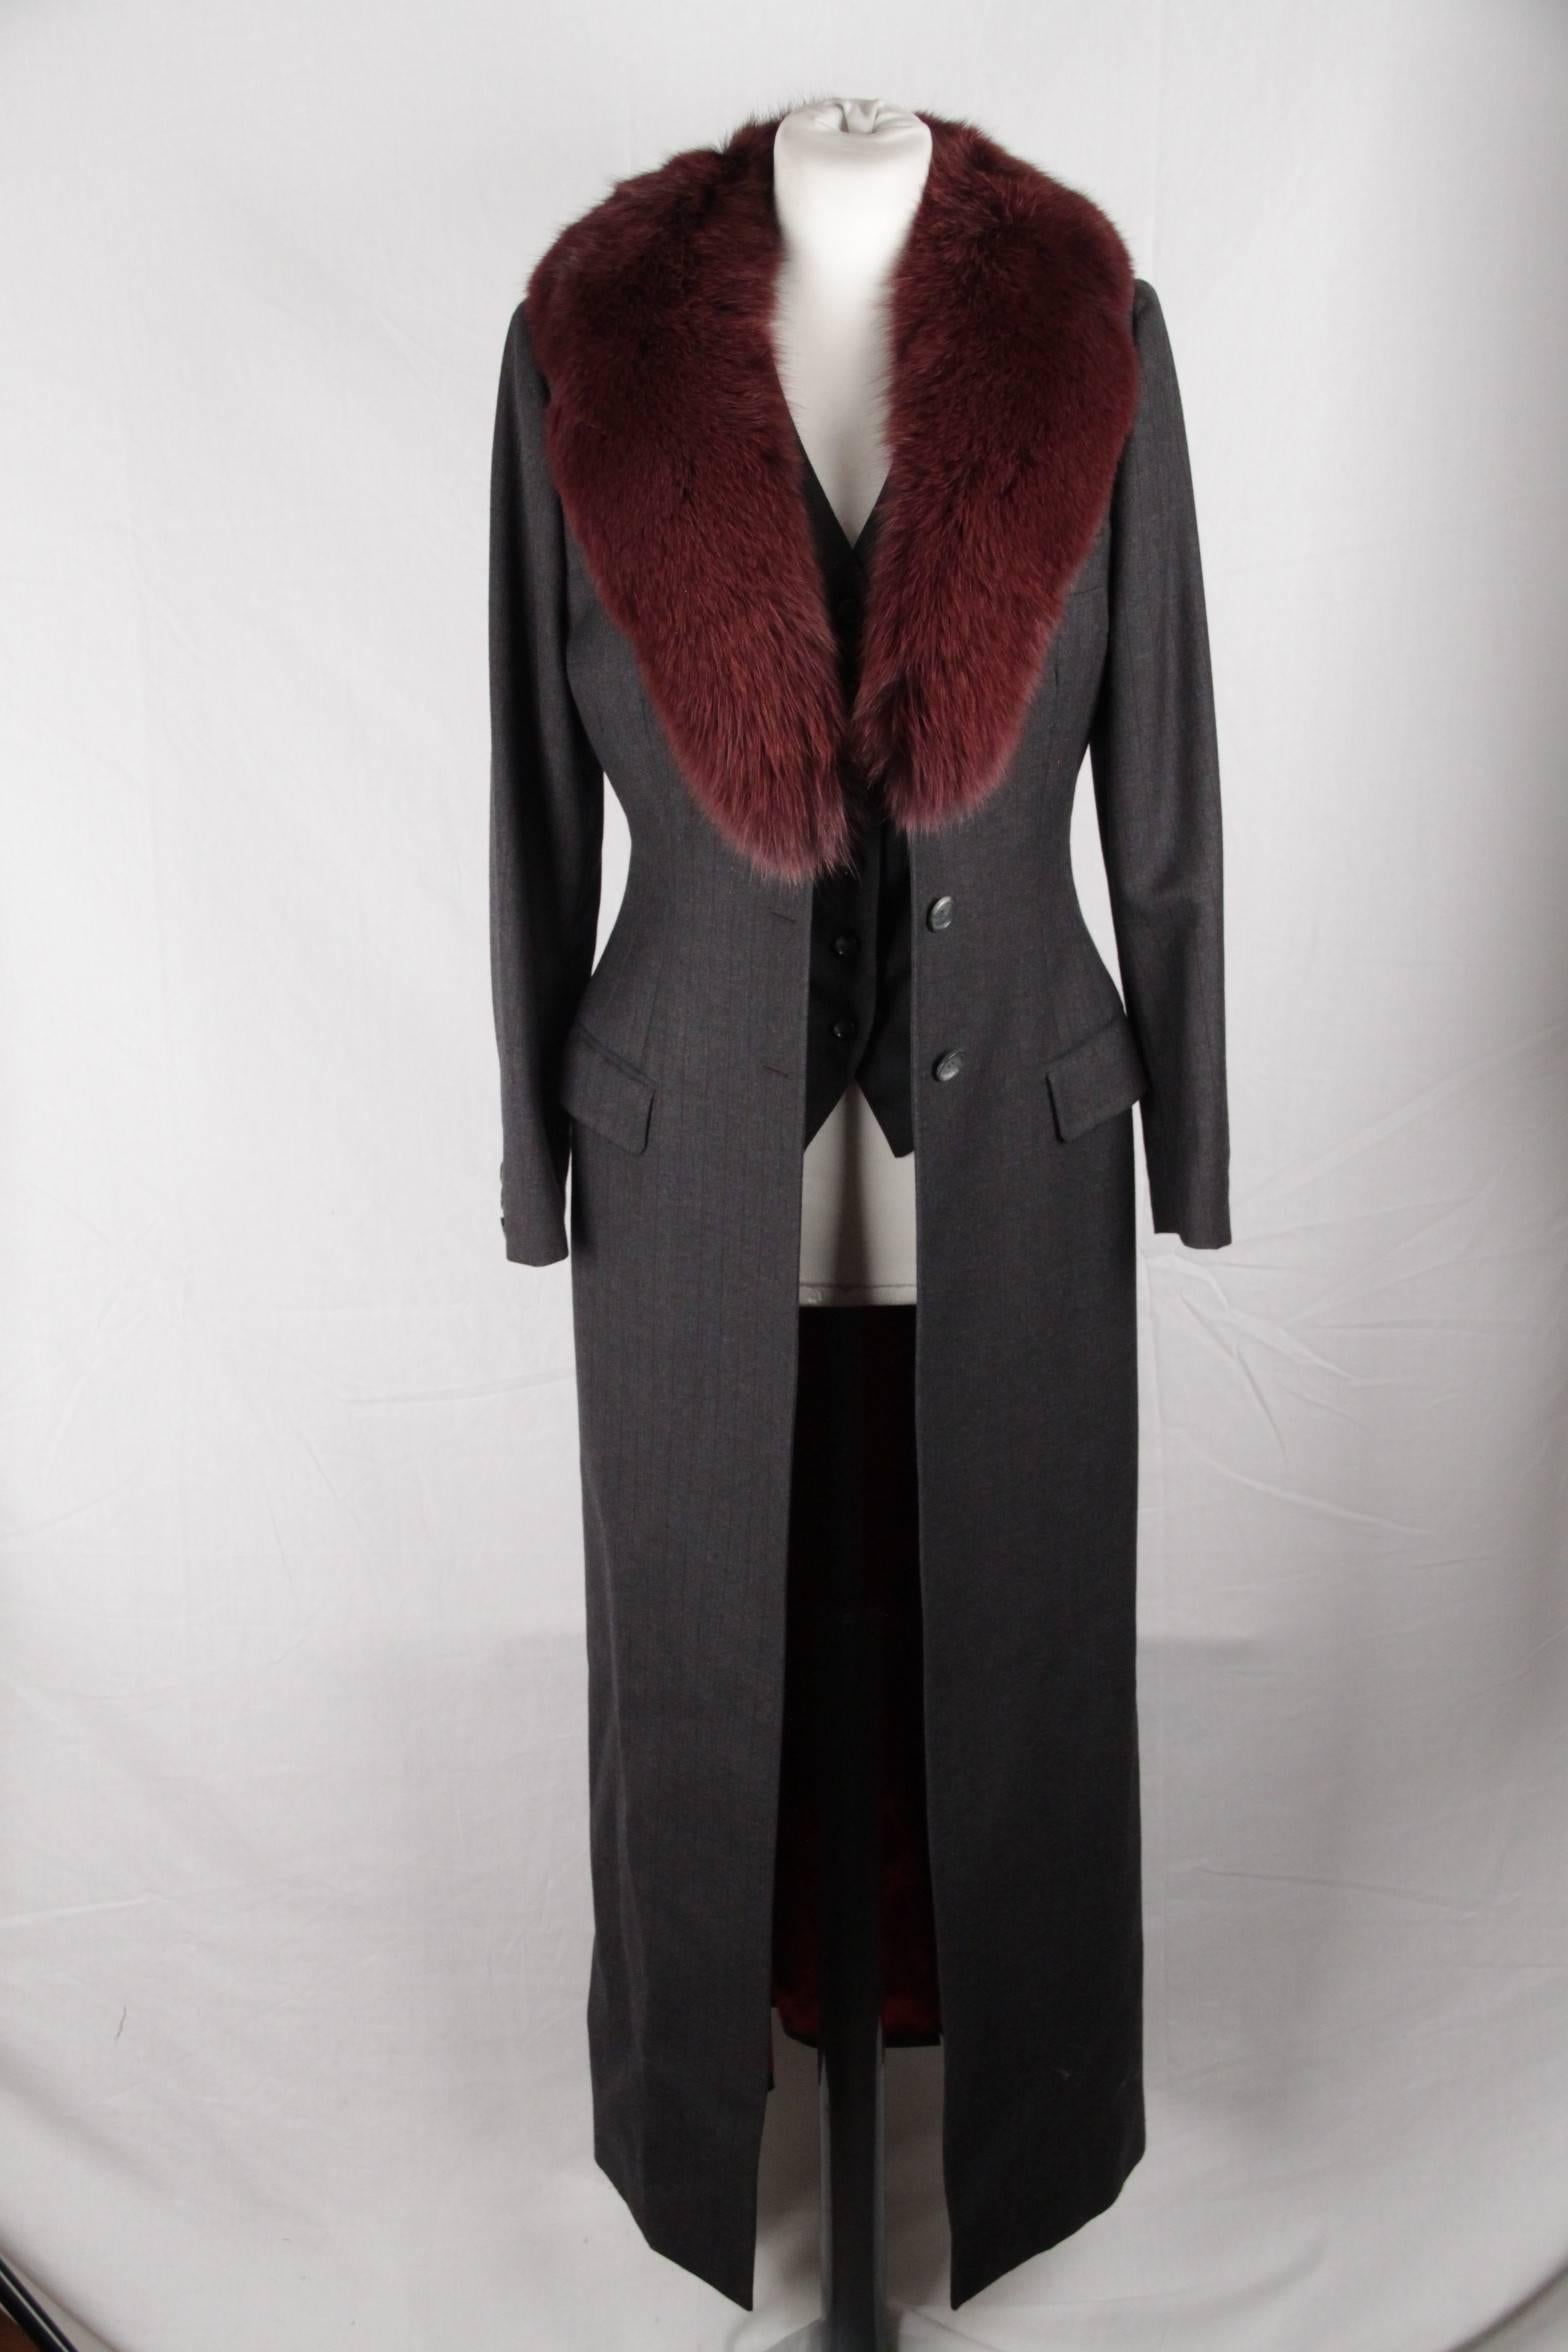 Women's DOLCE & GABBANA Gray Pinstriped PANT SUIT w/ FUR COLLAR COAT Size S